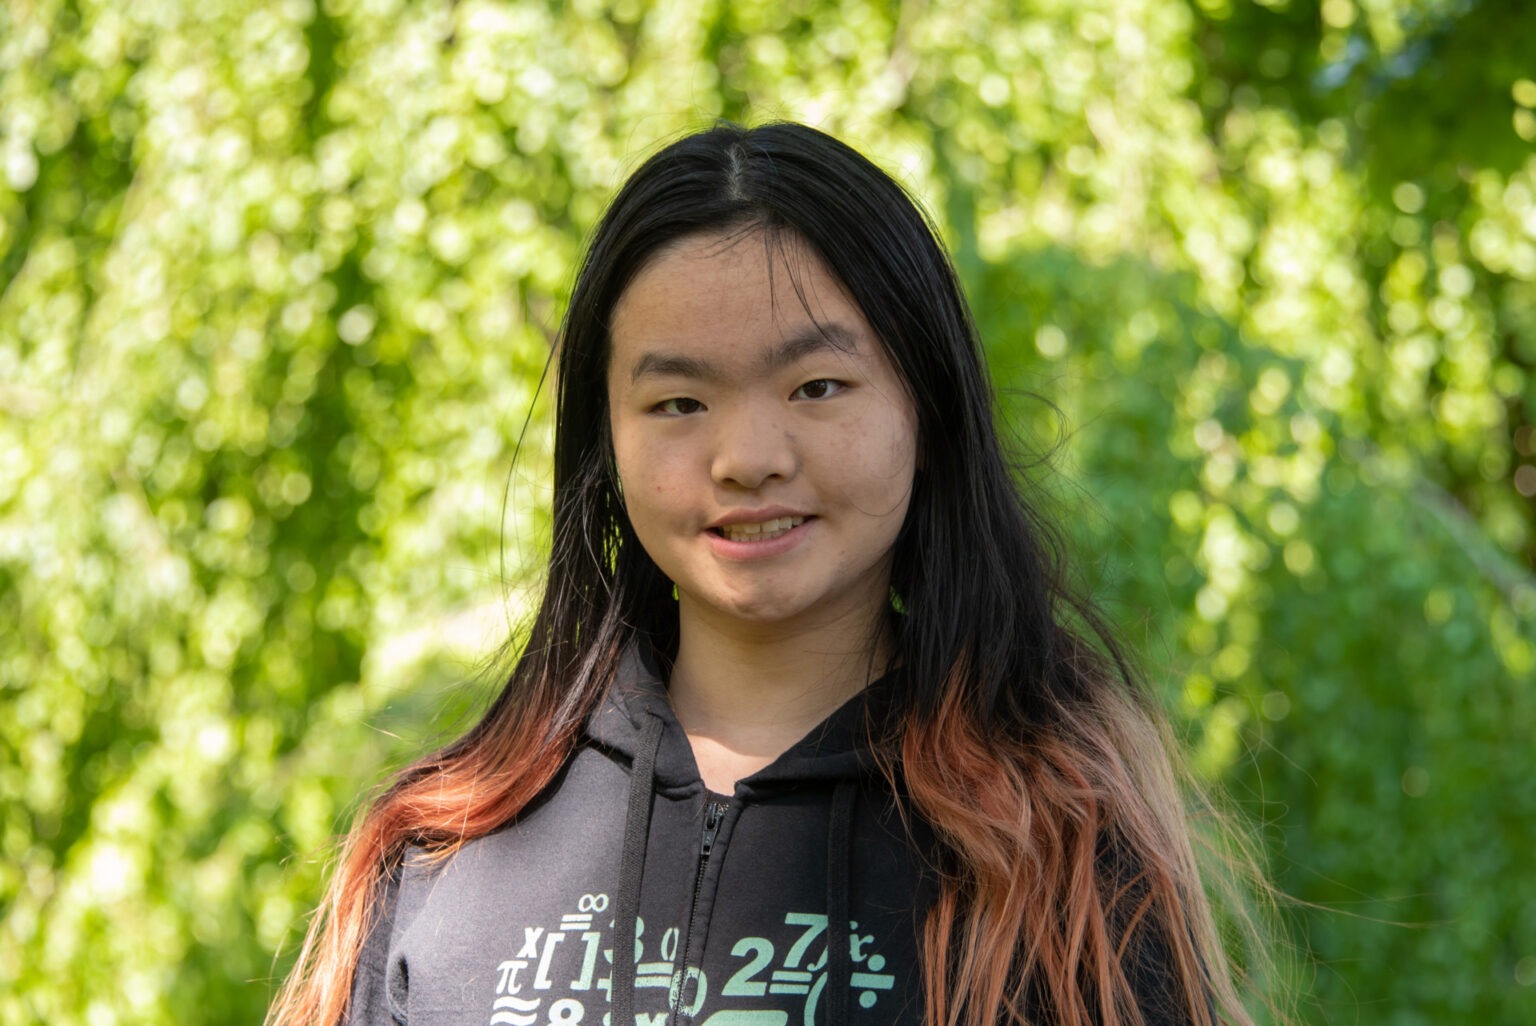 Xinqi (Jessie) Wang ’26 wins Mathematical Association of America’s 2023 Young Women in Mathematics Award